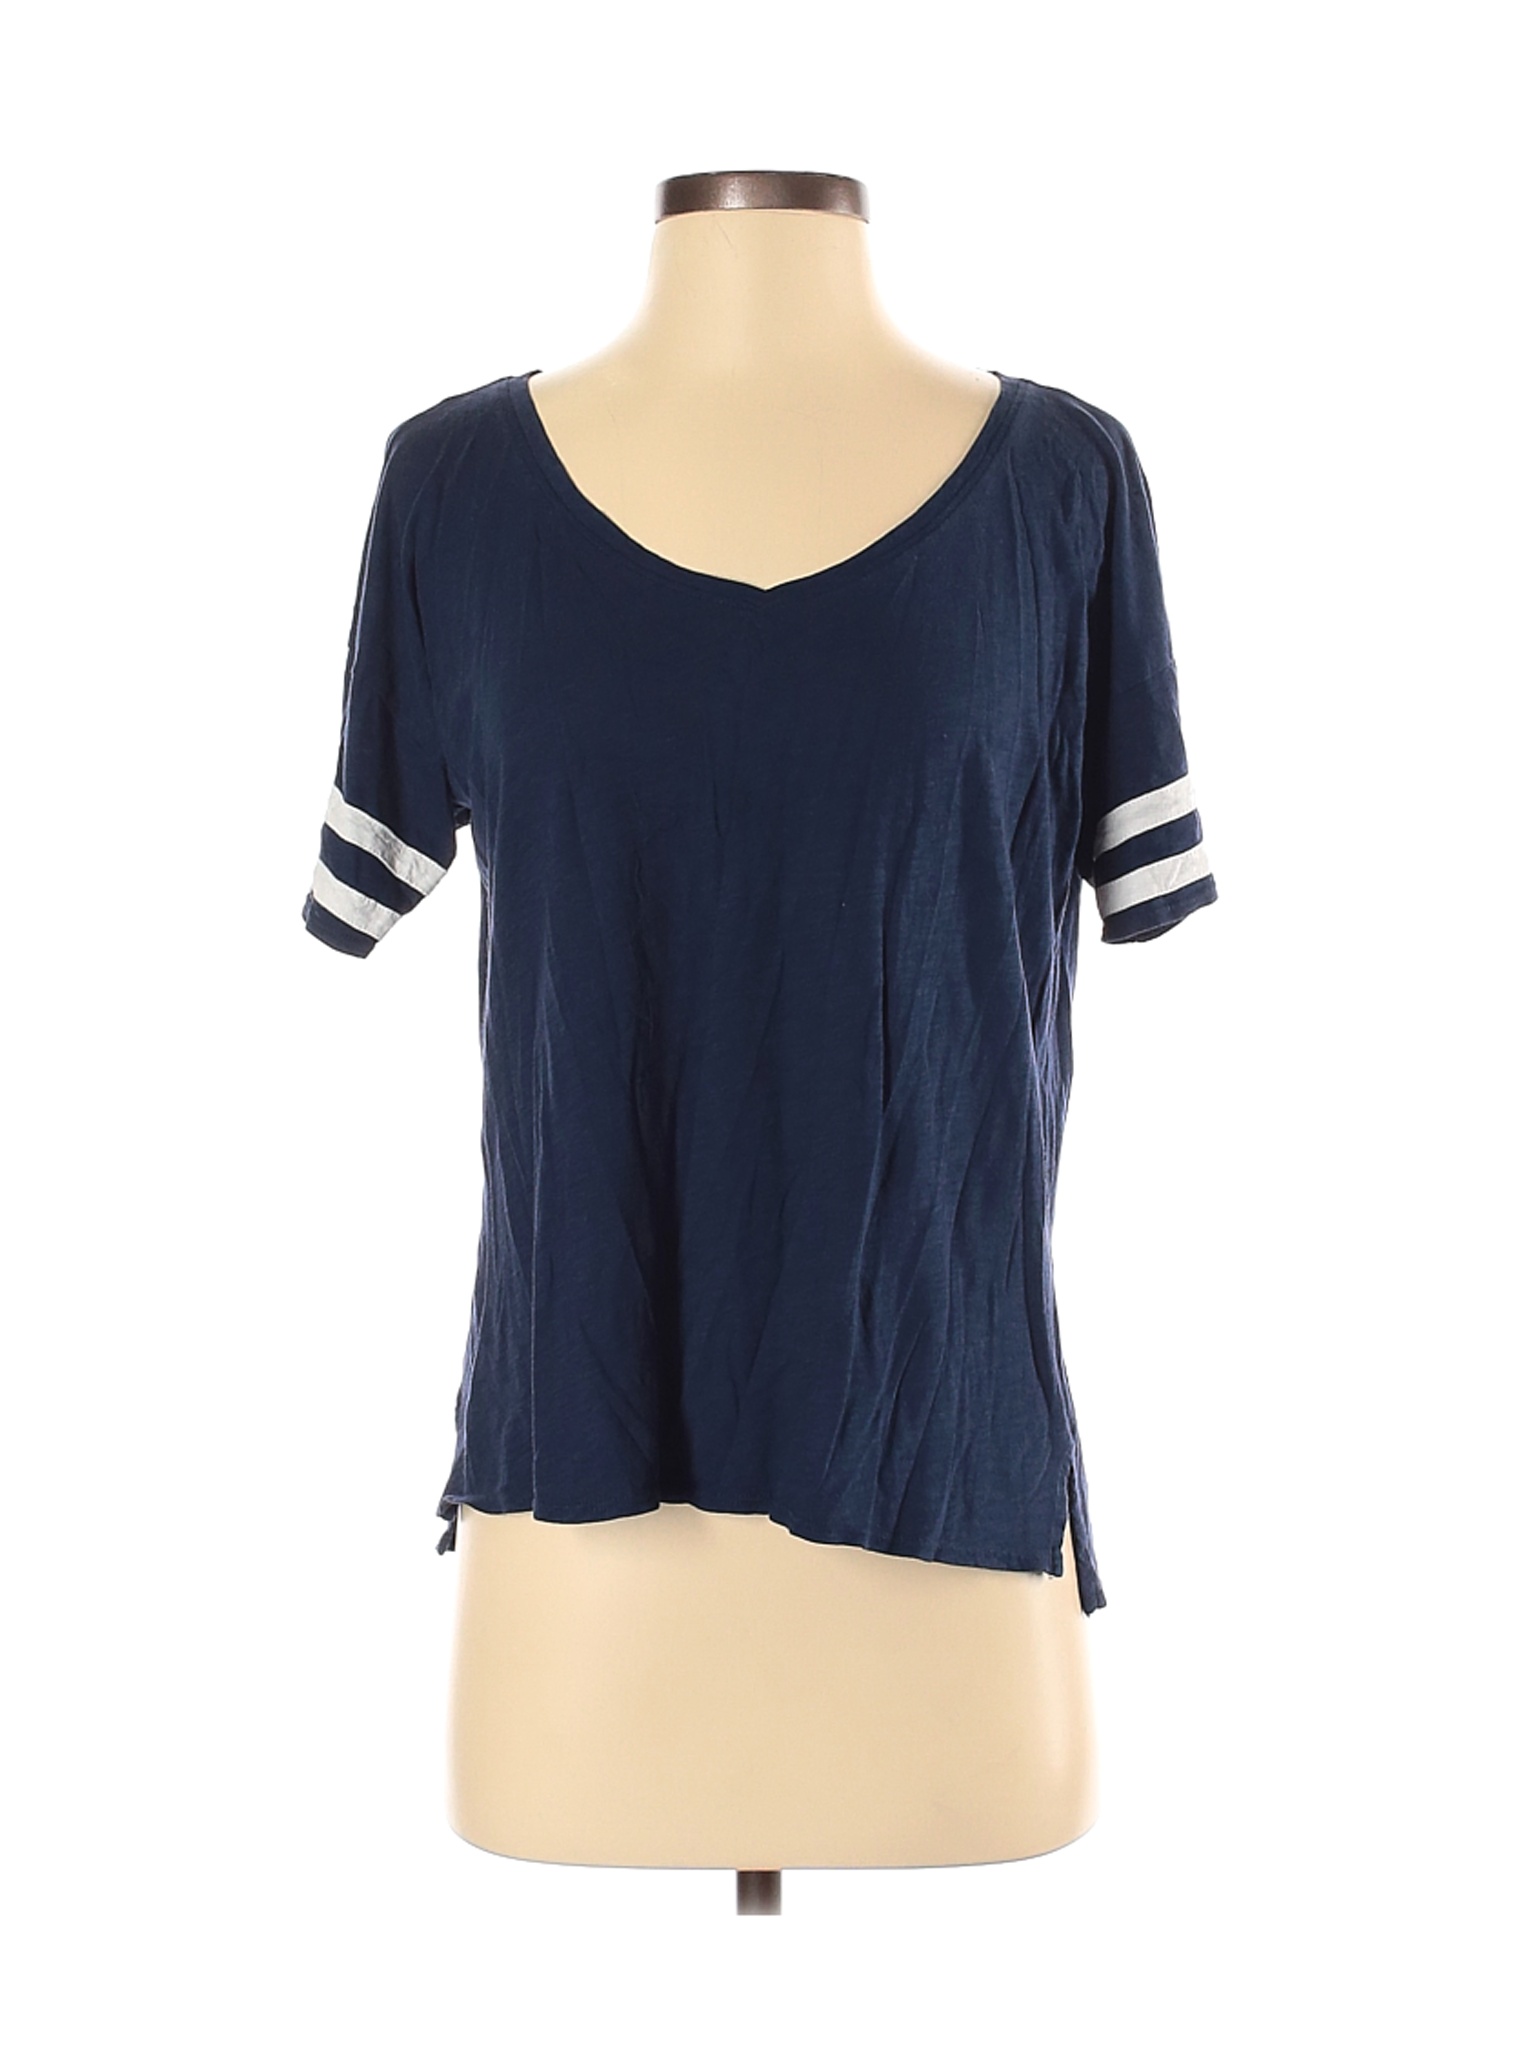 Marine Layer Women Blue Short Sleeve T-Shirt S | eBay